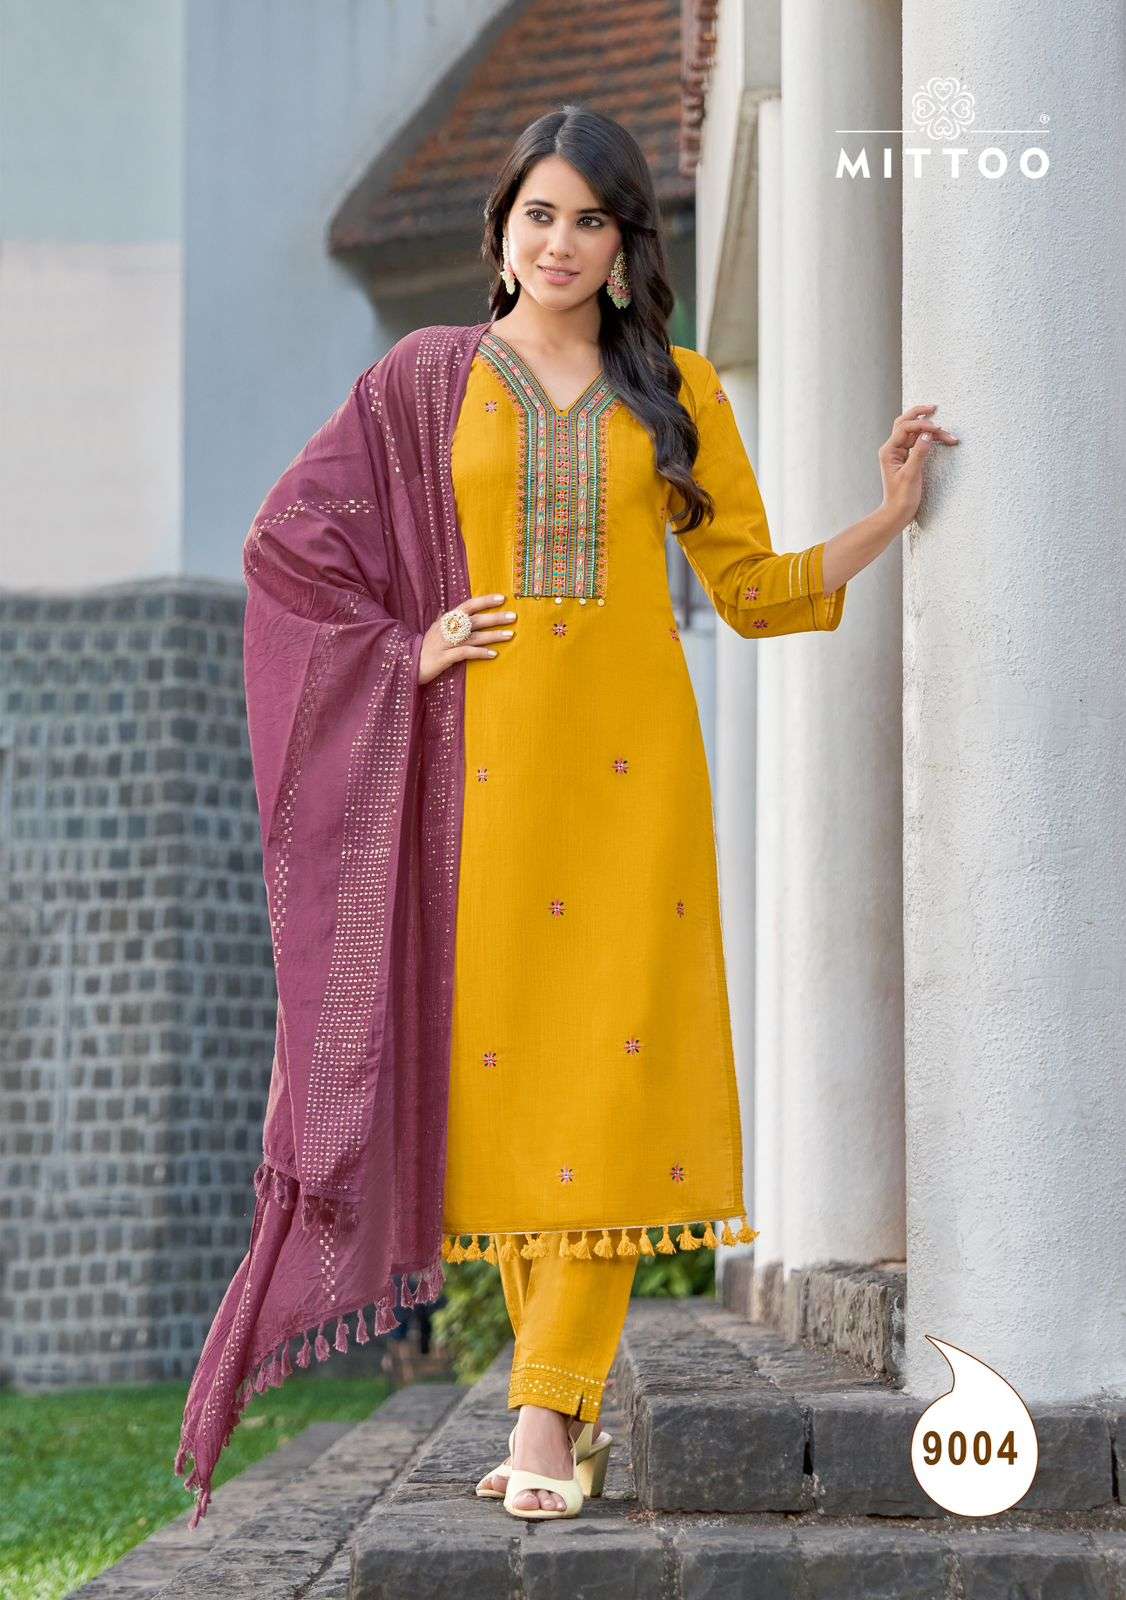 mittoo mosam 9001-9006 series designer latest fancy kurti pant dupatta set wholesaler surat gujarat